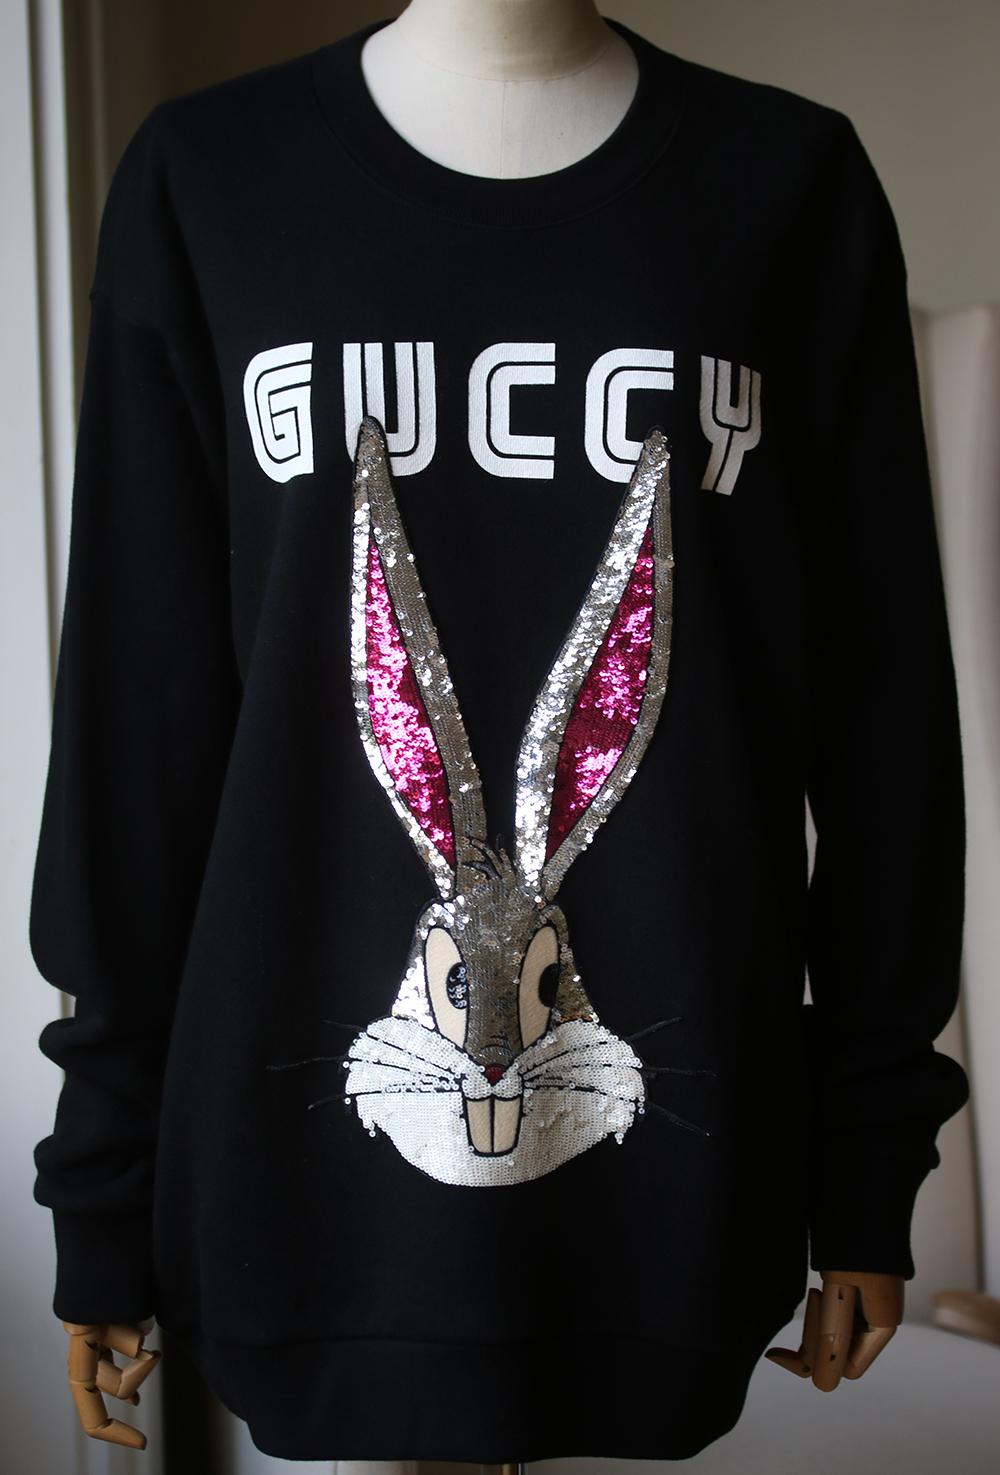 bugs bunny gucci hoodie